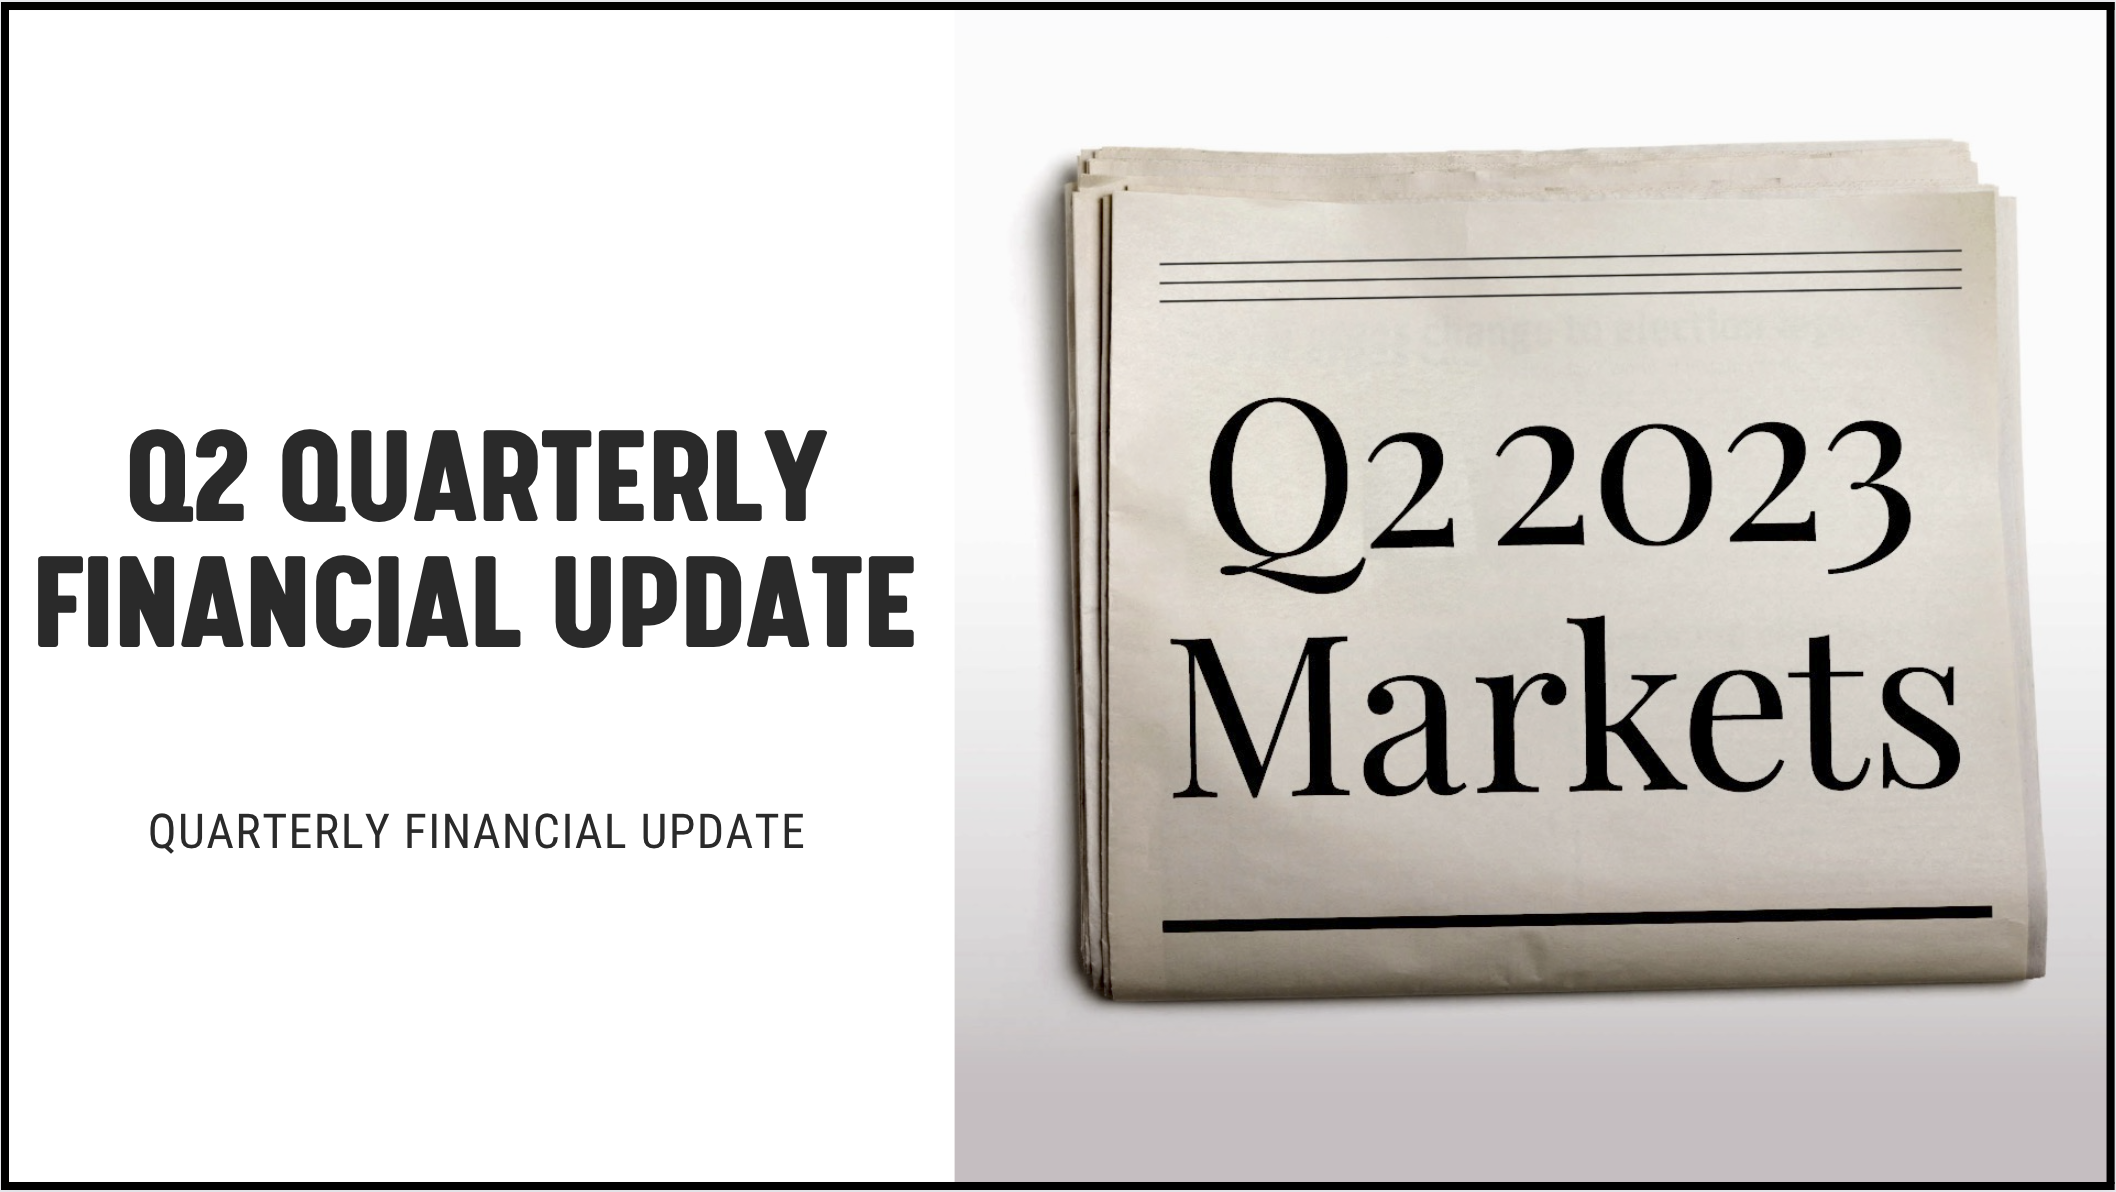 [NEW] Q2 2023 Quarterly Financial Update